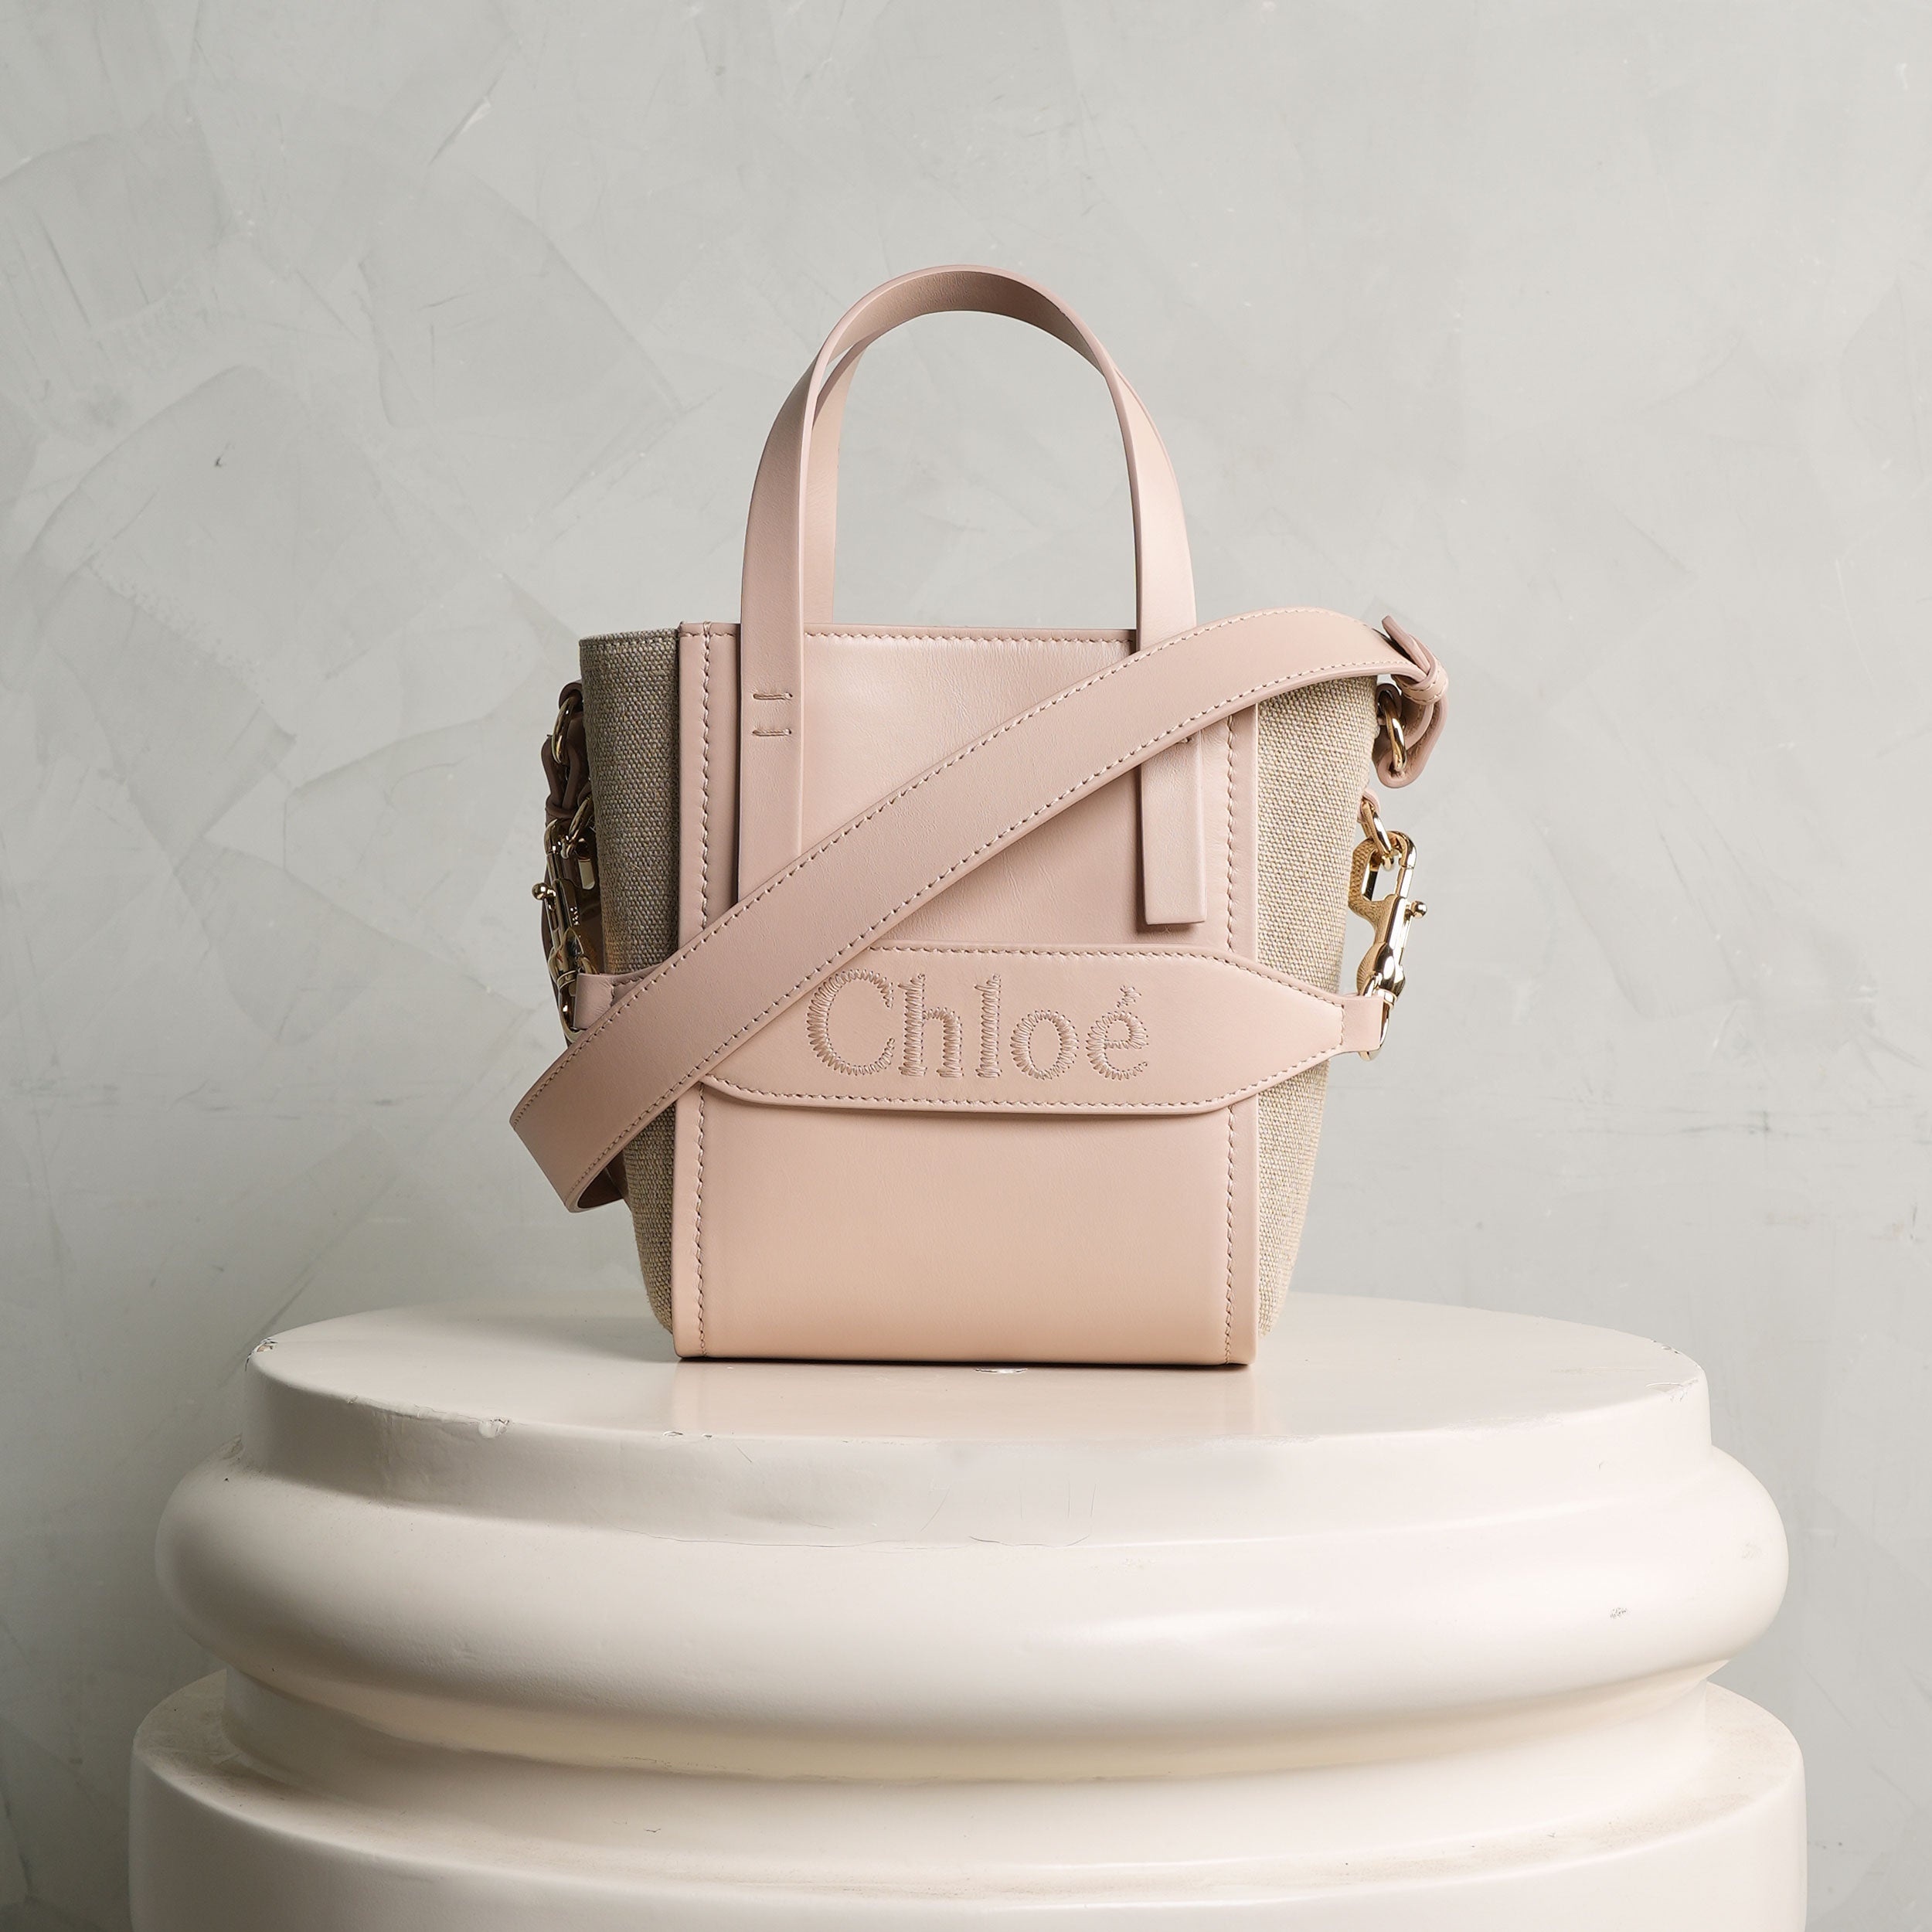 Chloé Pink Bags & Handbags for Women | eBay